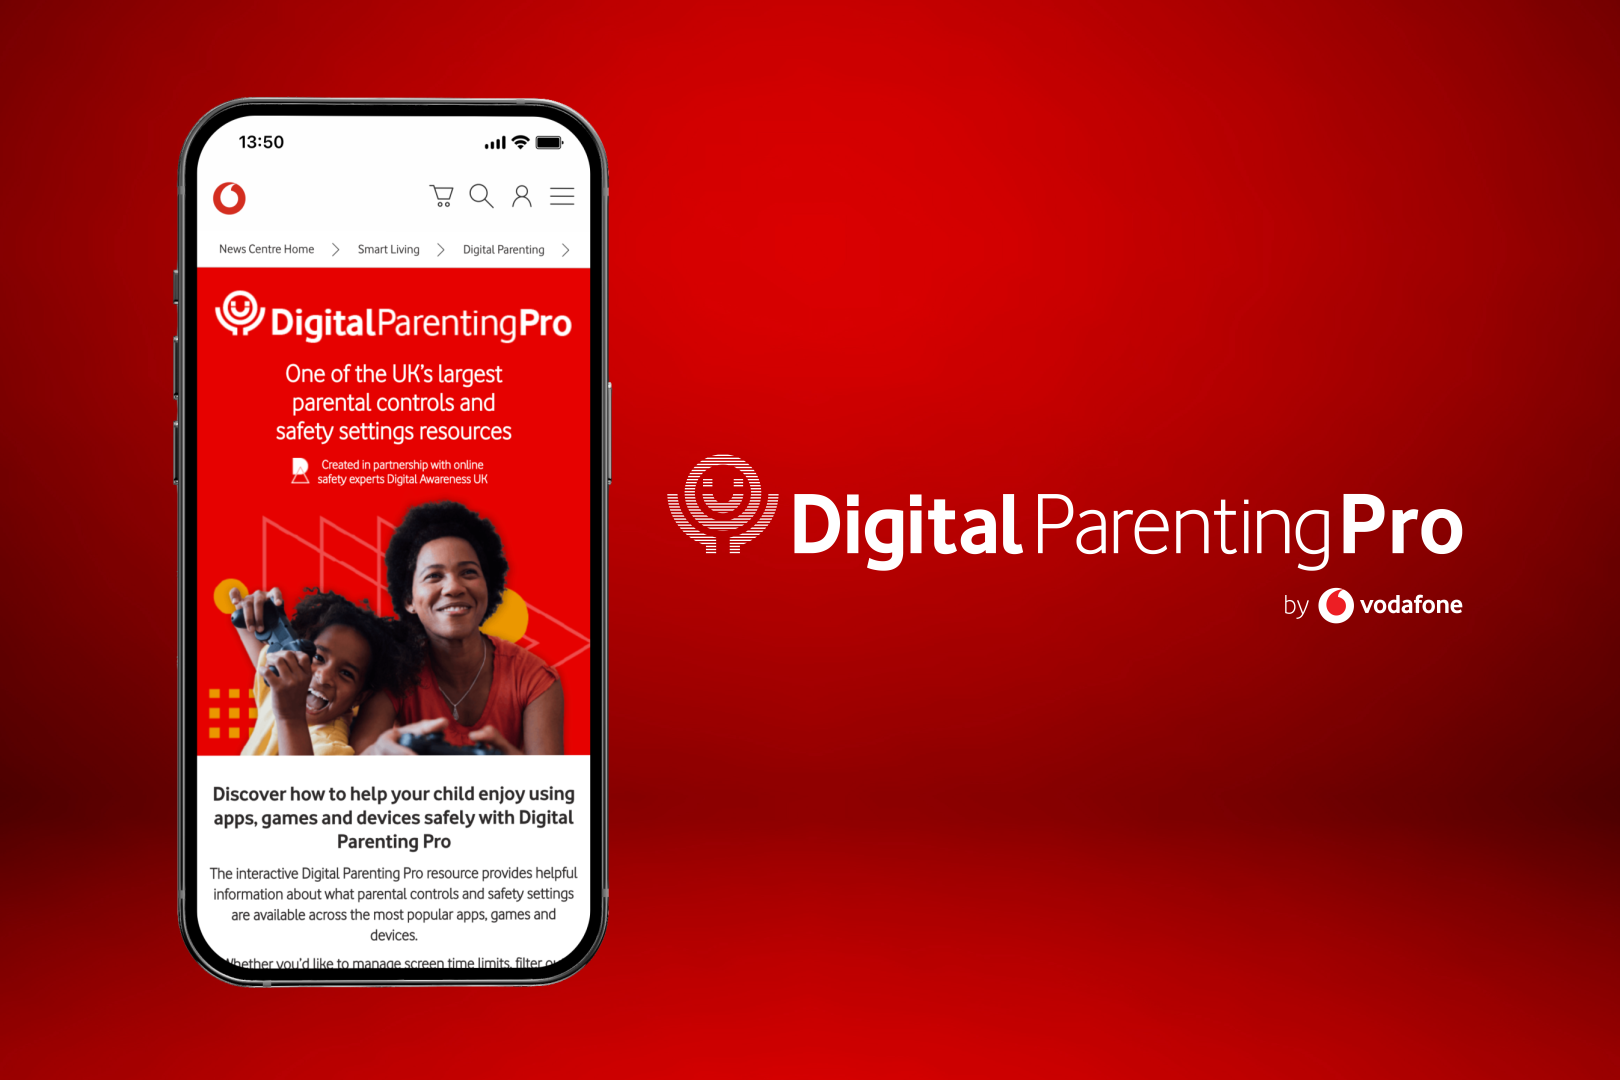 Vodafone Digital Parenting Pro